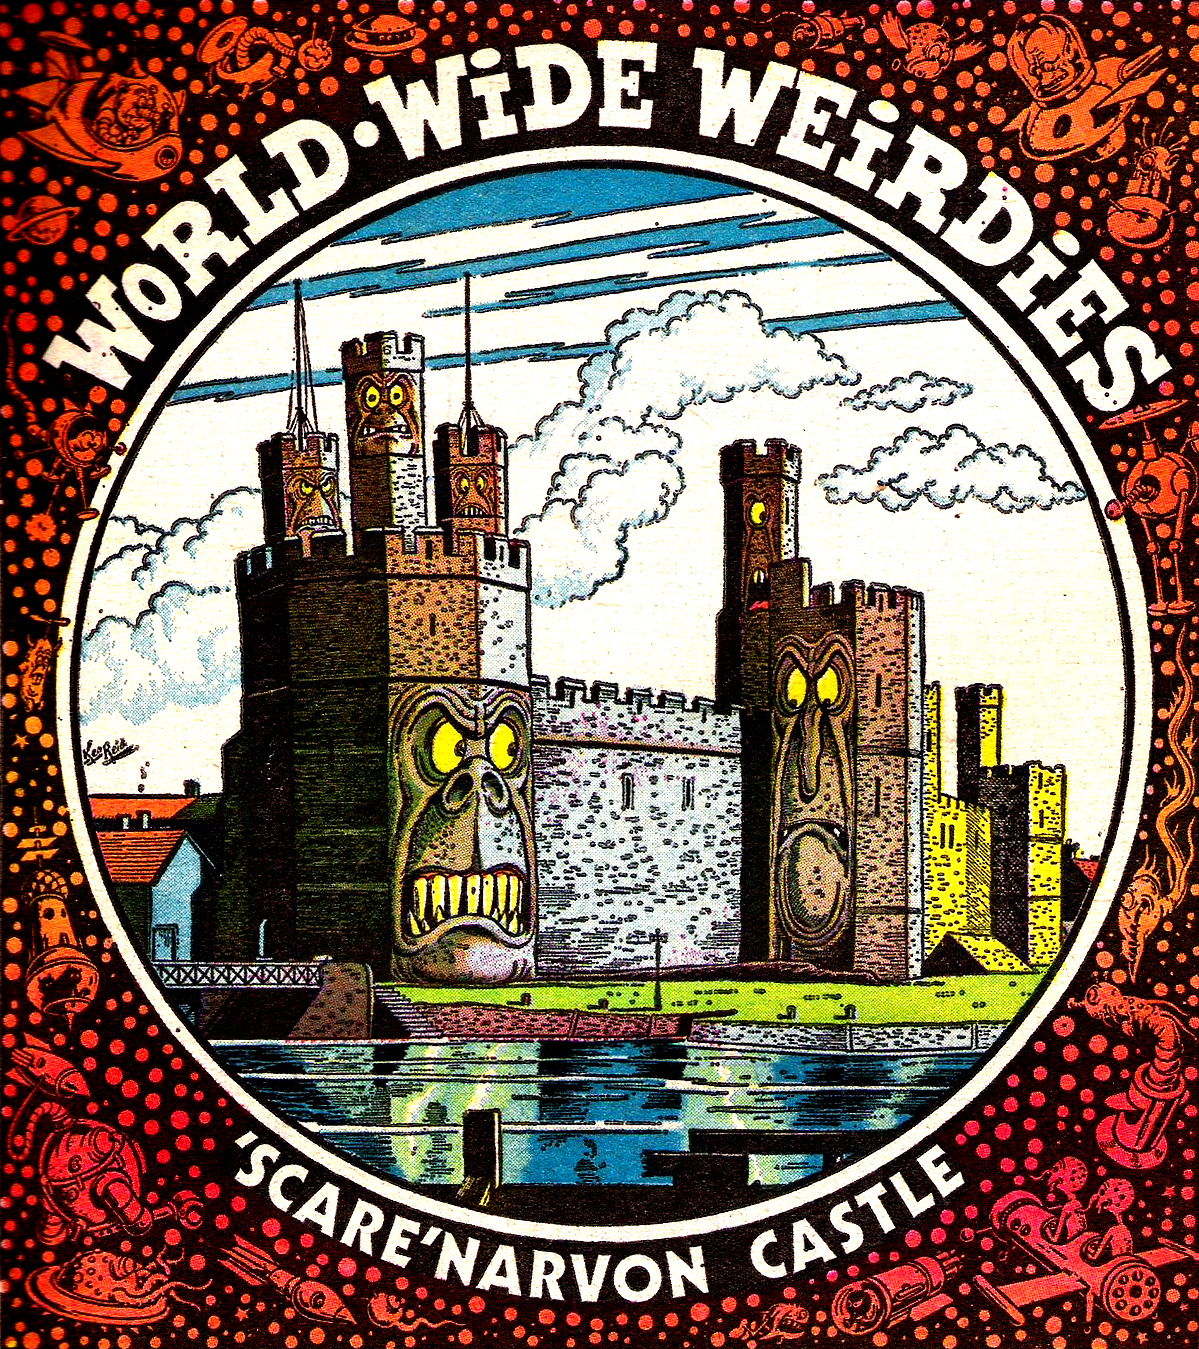 Ken Reid - World Wide Weirdies 38